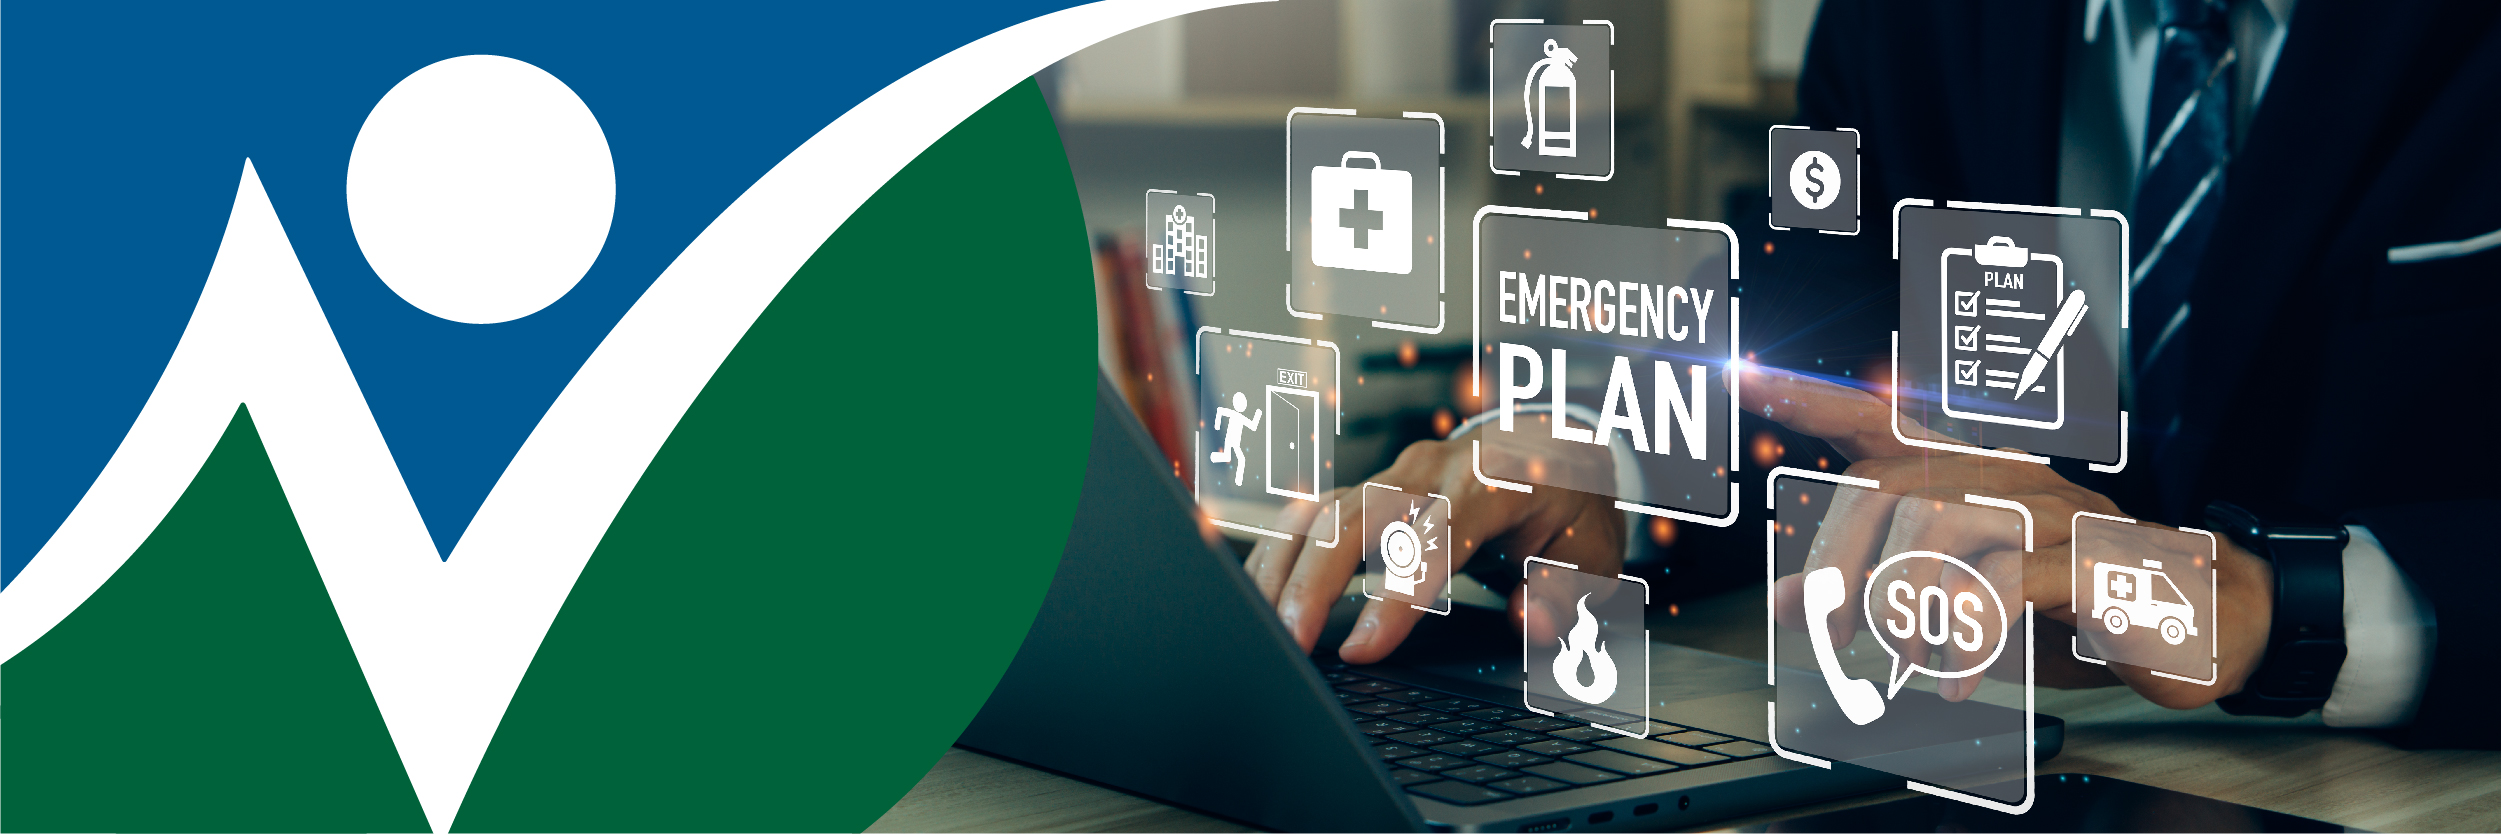 NNCIl logo next to a photo of someone making an emergency plan